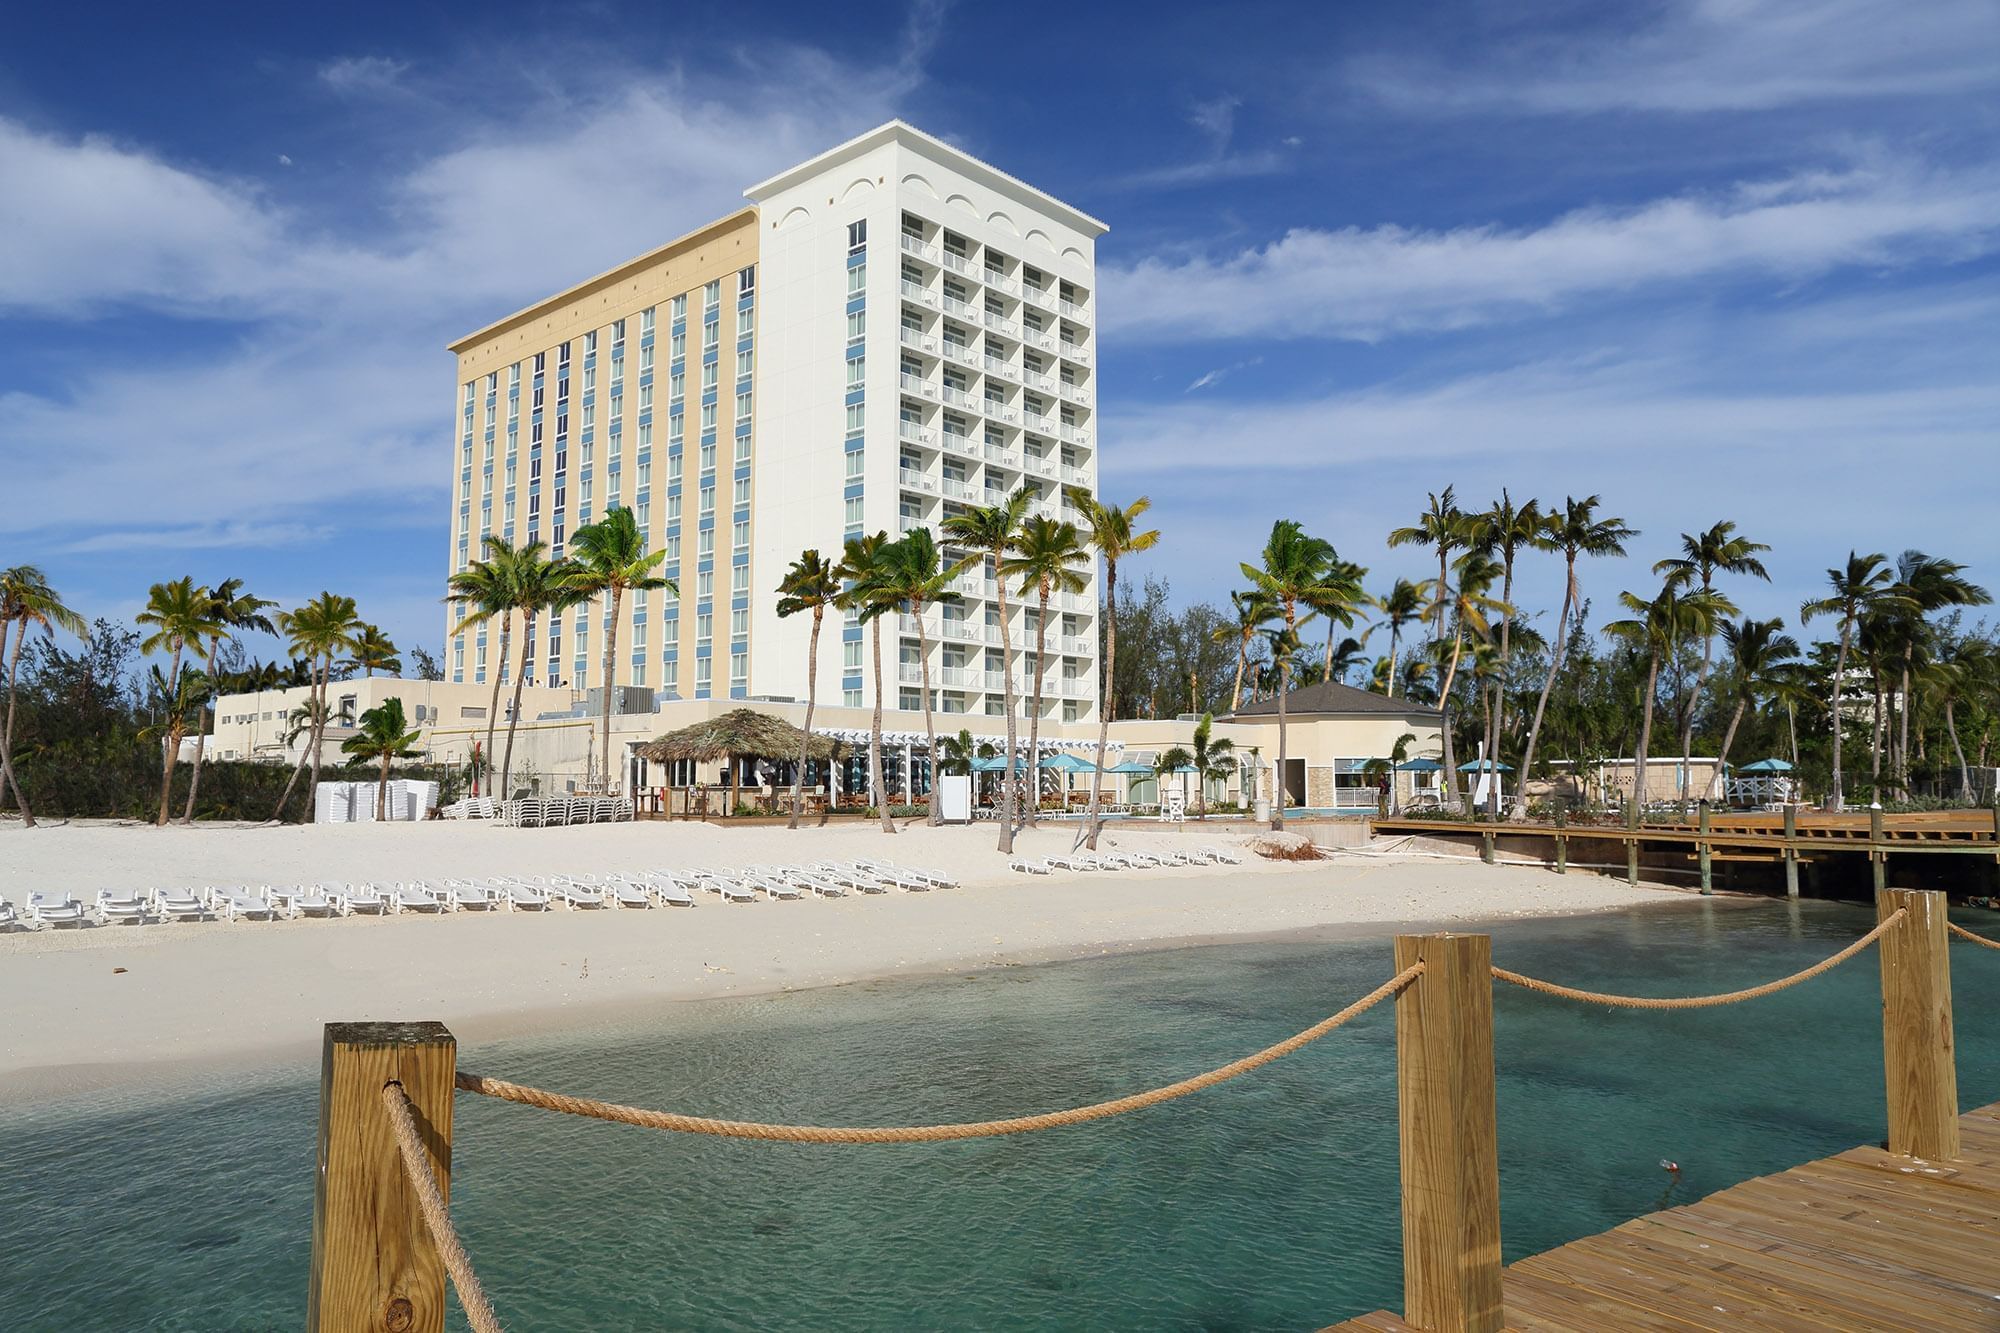 Warwick Paradise Island Resort- First Class Paradise Island, Bahamas  Hotels- GDS Reservation Codes: Travel Weekly